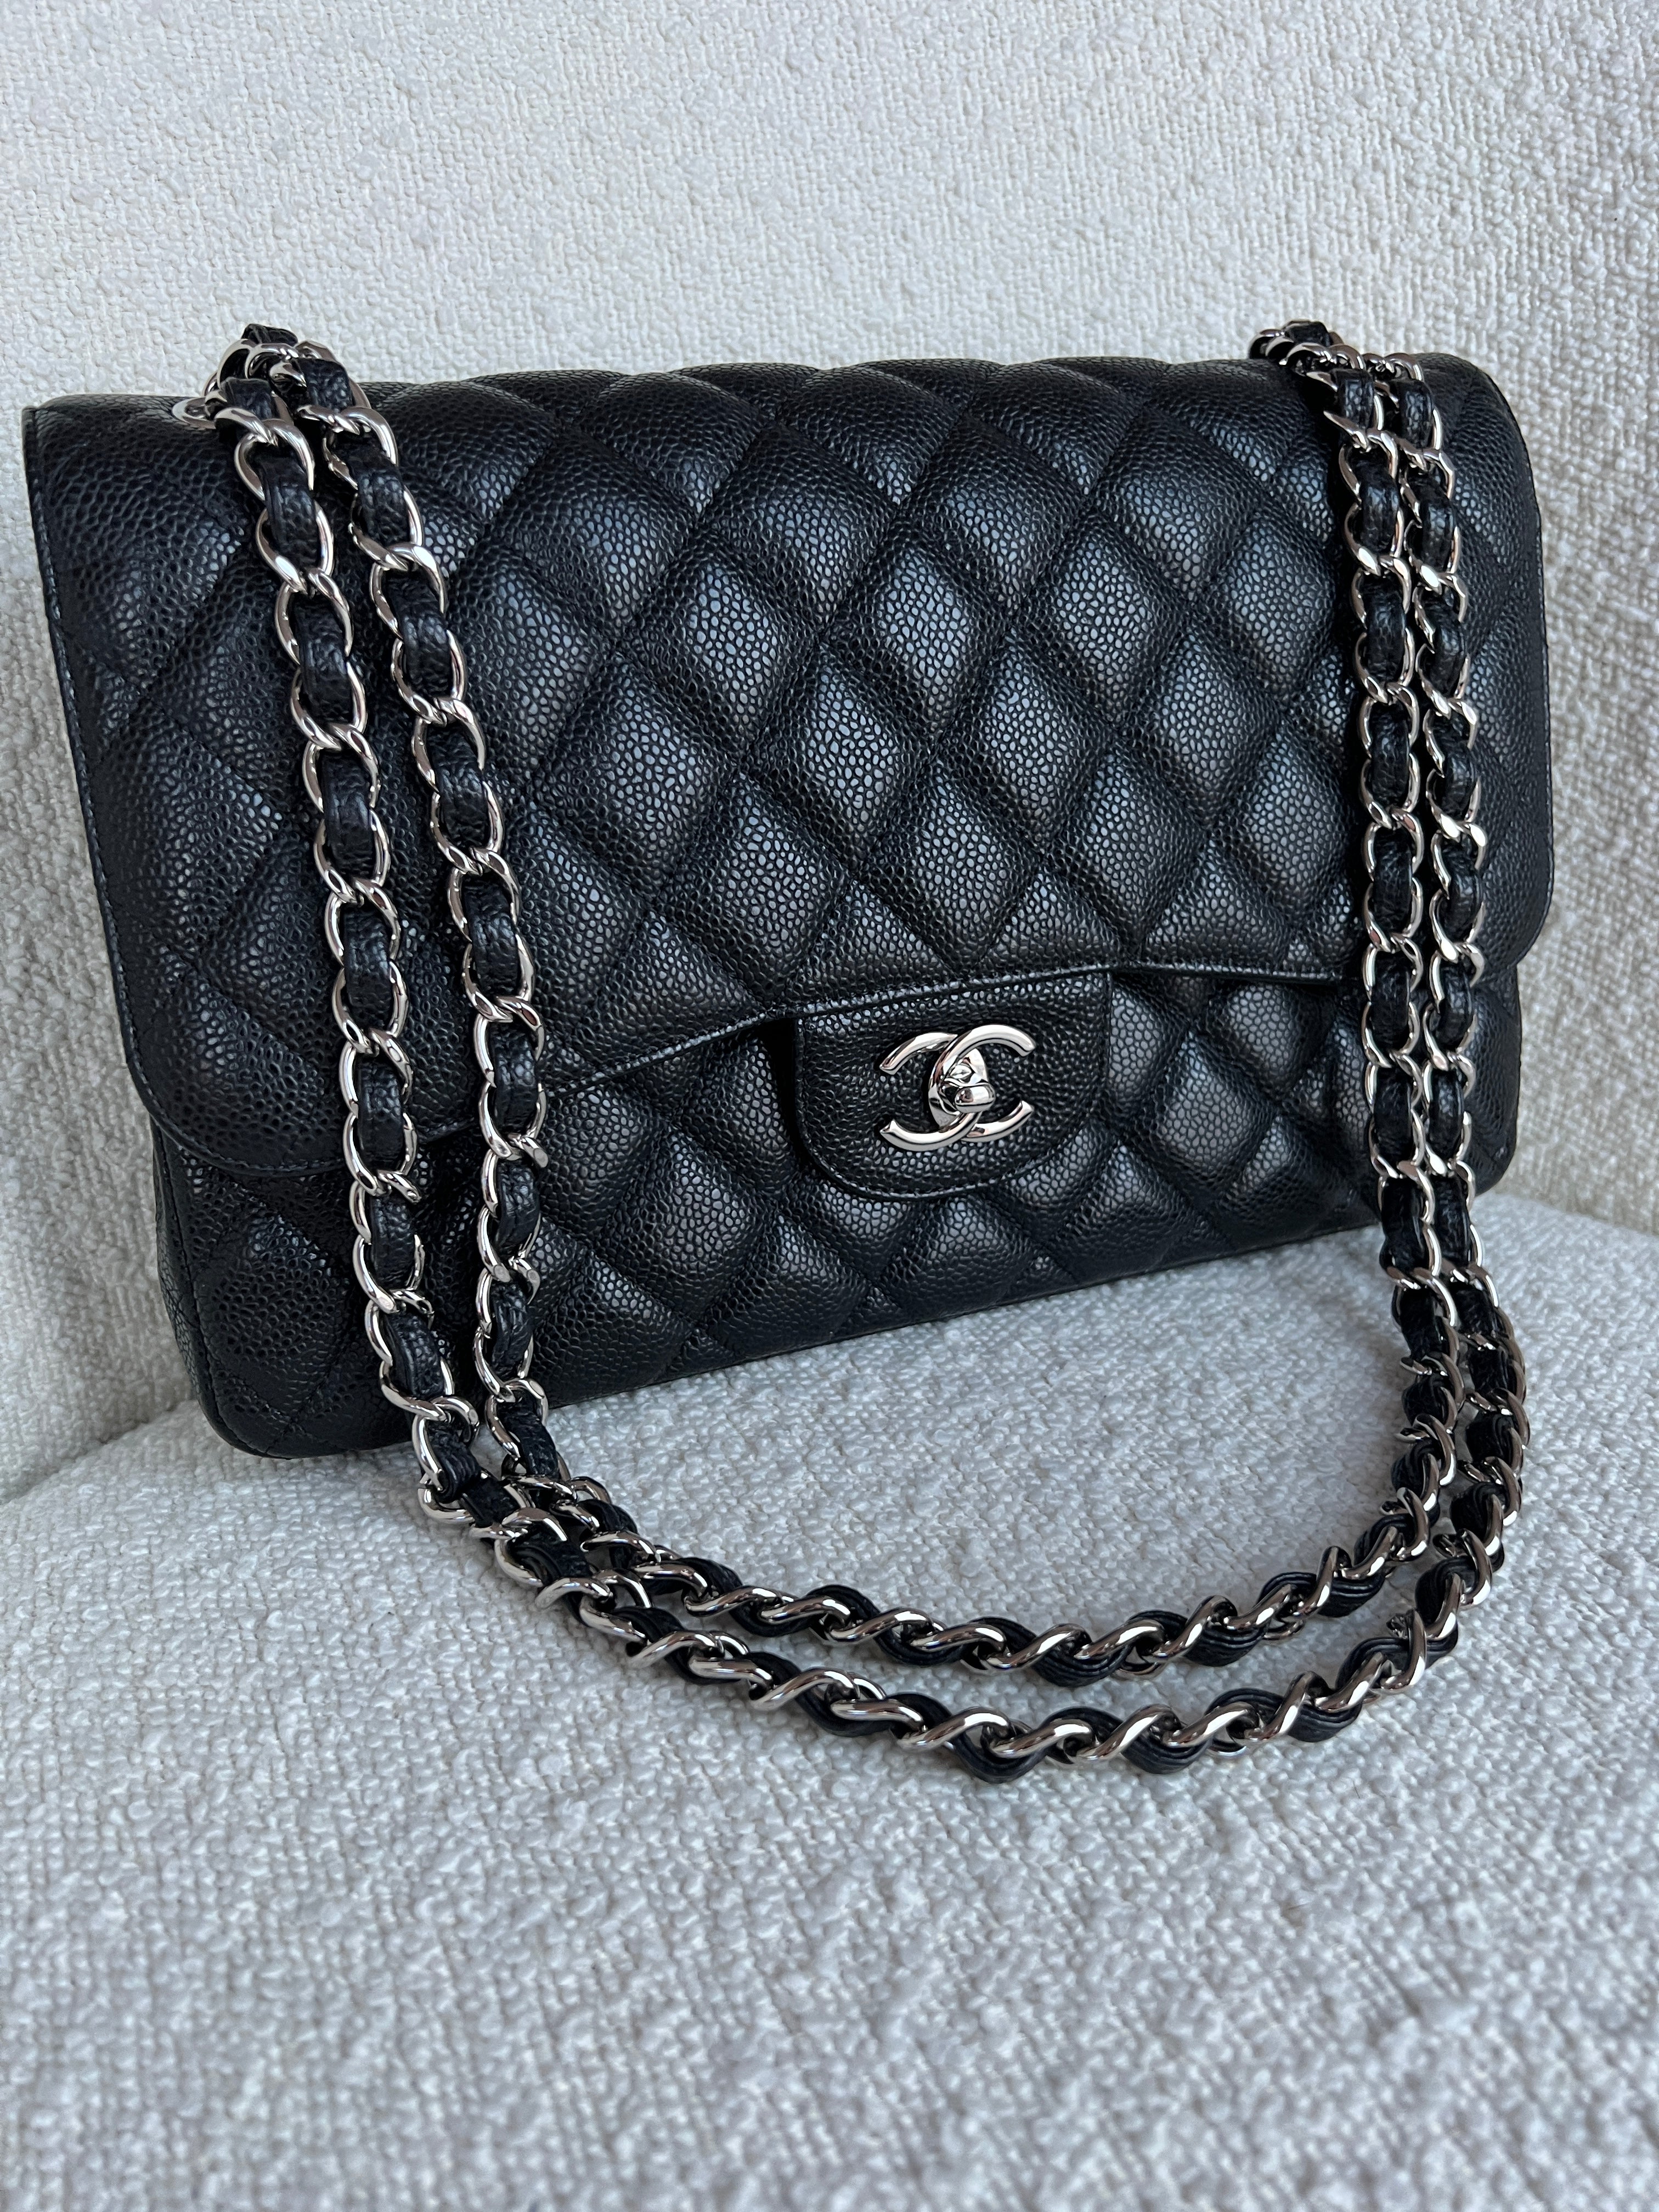 CHANEL Caviar Jumbo Double Flap Bag(RRP £9,240)